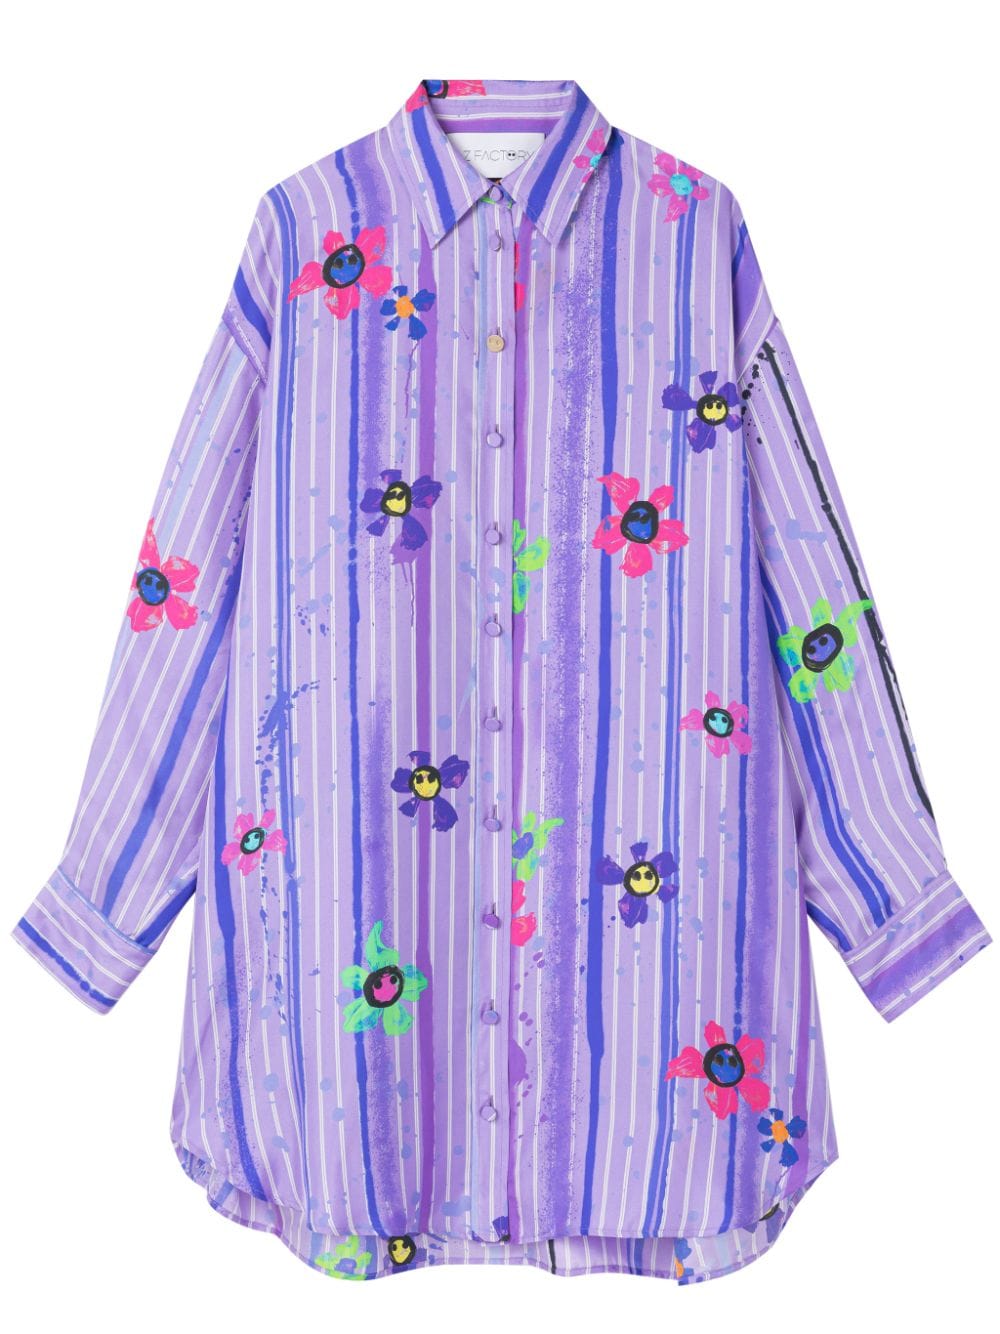 AZ FACTORY Hemdkleid mit Blumen-Print - Violett von AZ FACTORY